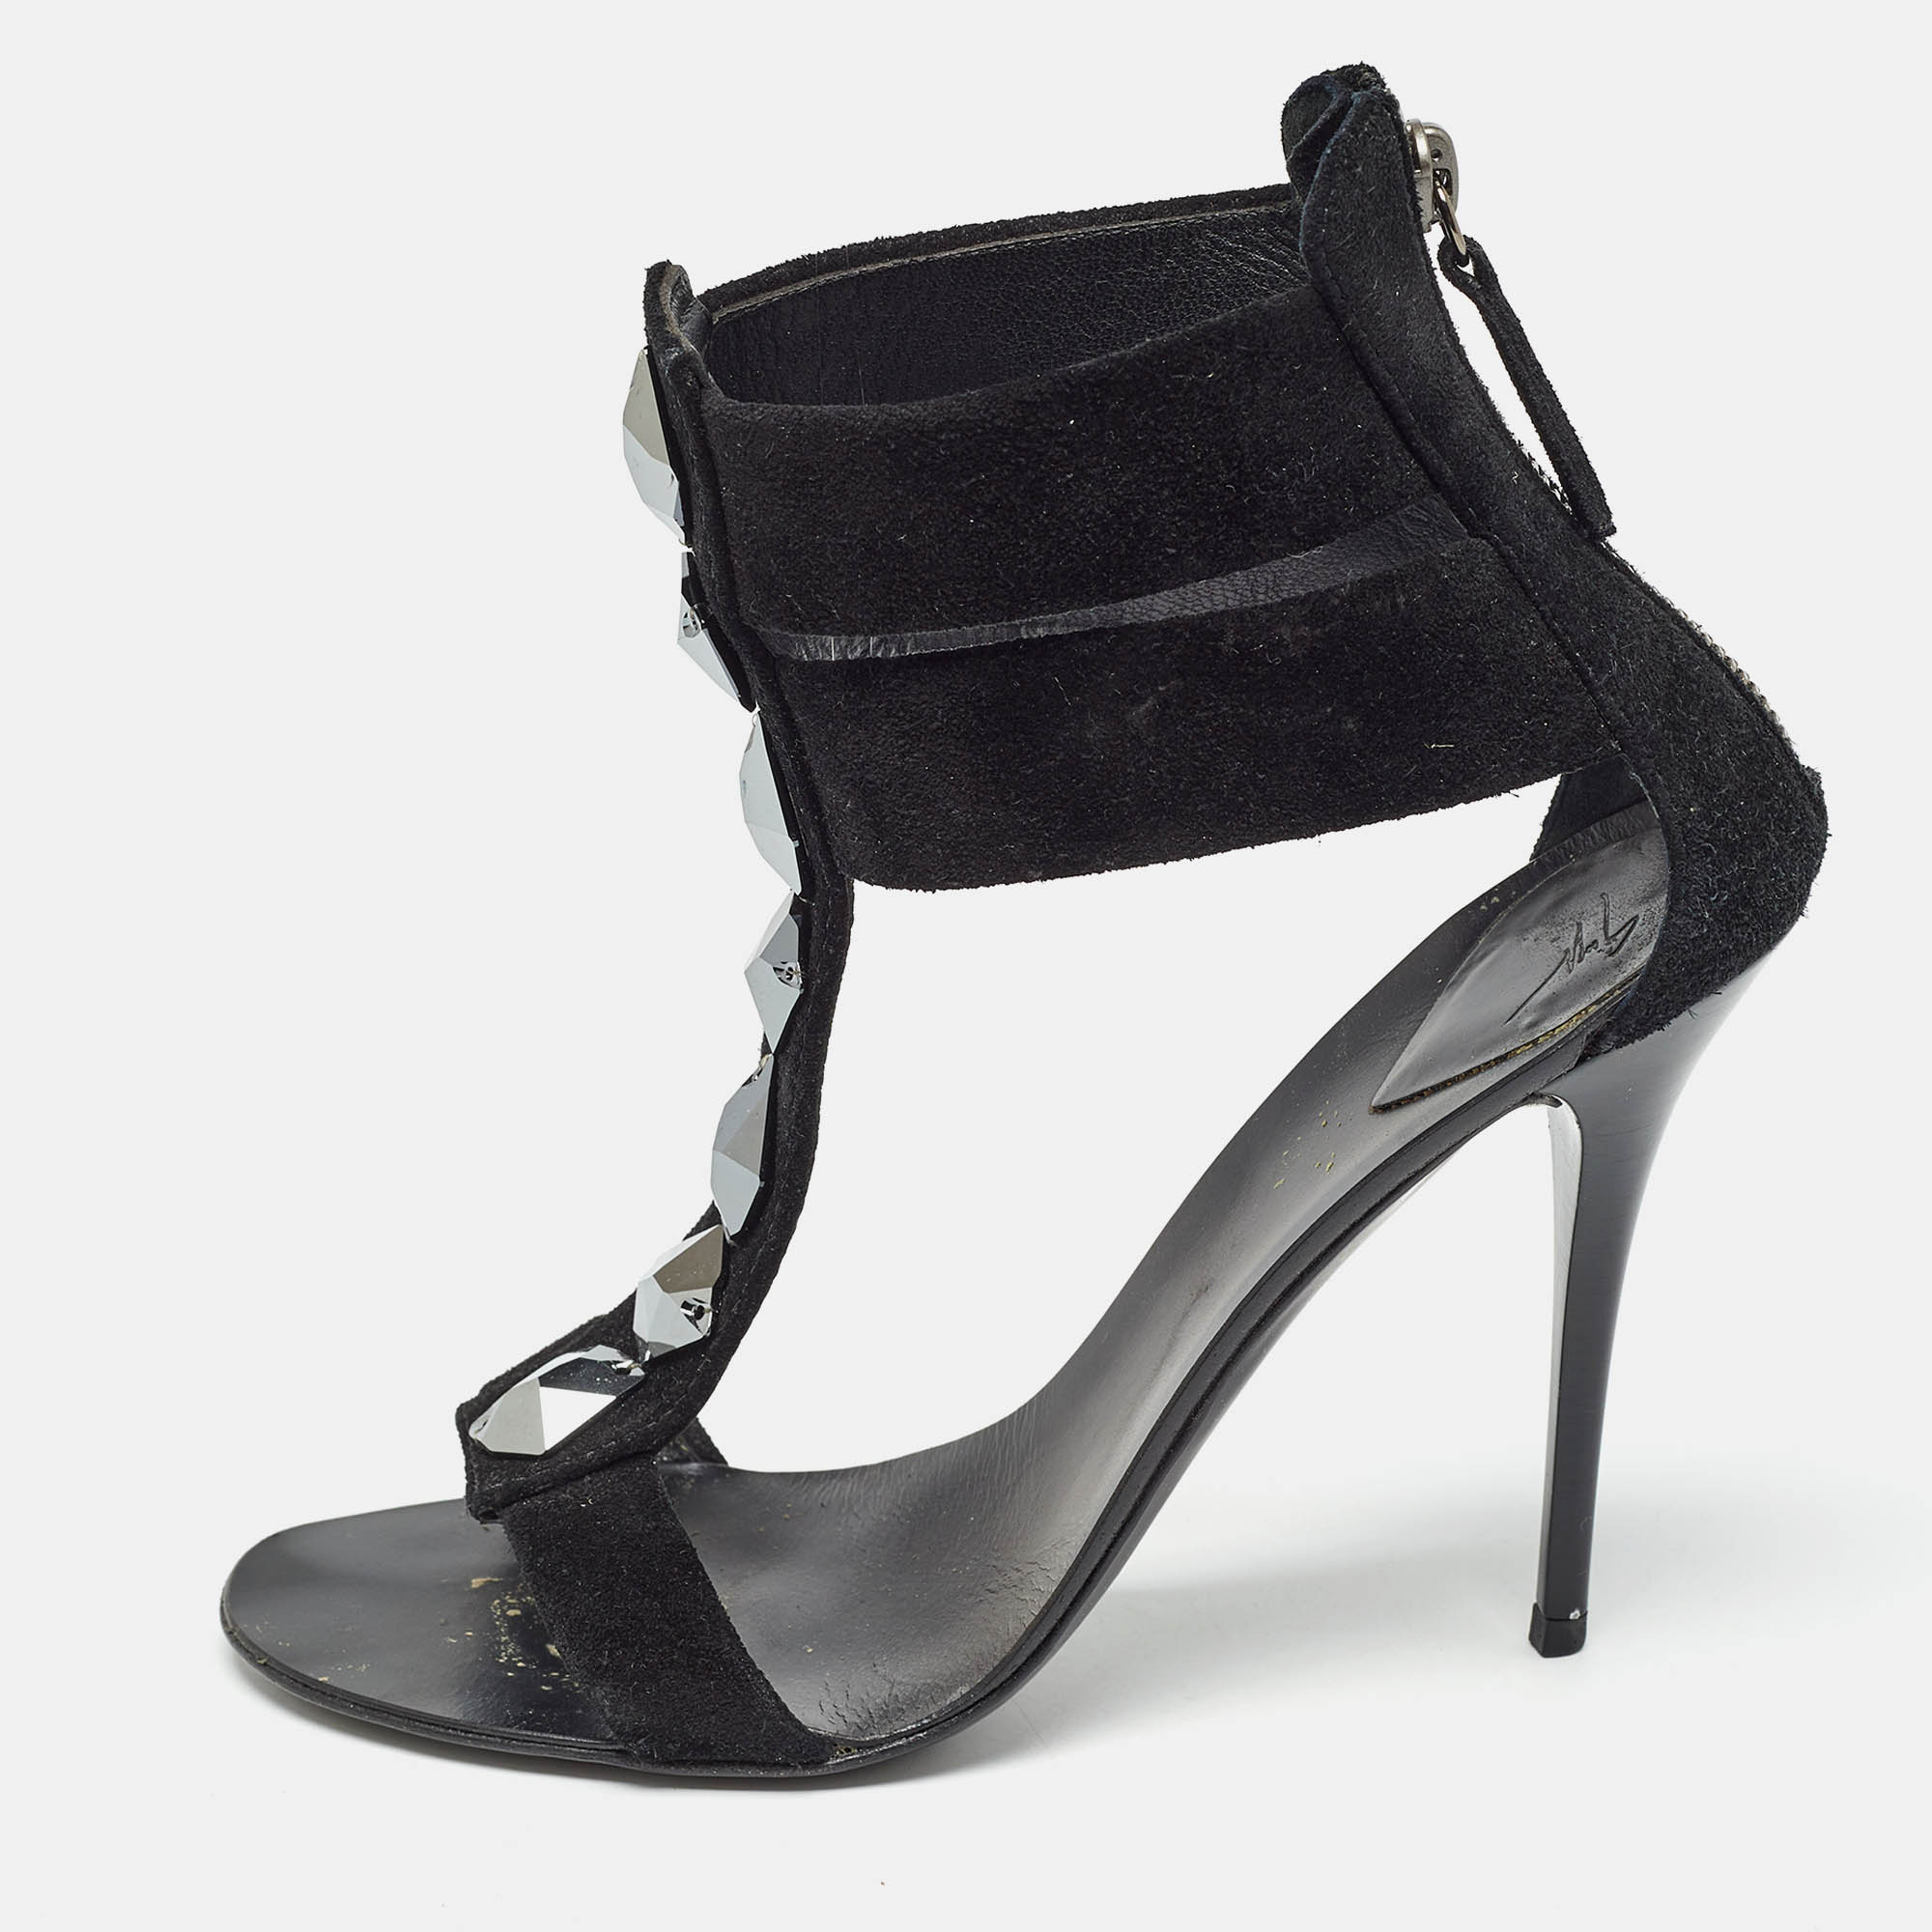 Pre-owned Giuseppe Zanotti Black Suede Crystal Embellished T-bar Ankle Strap Sandals Size 37.5